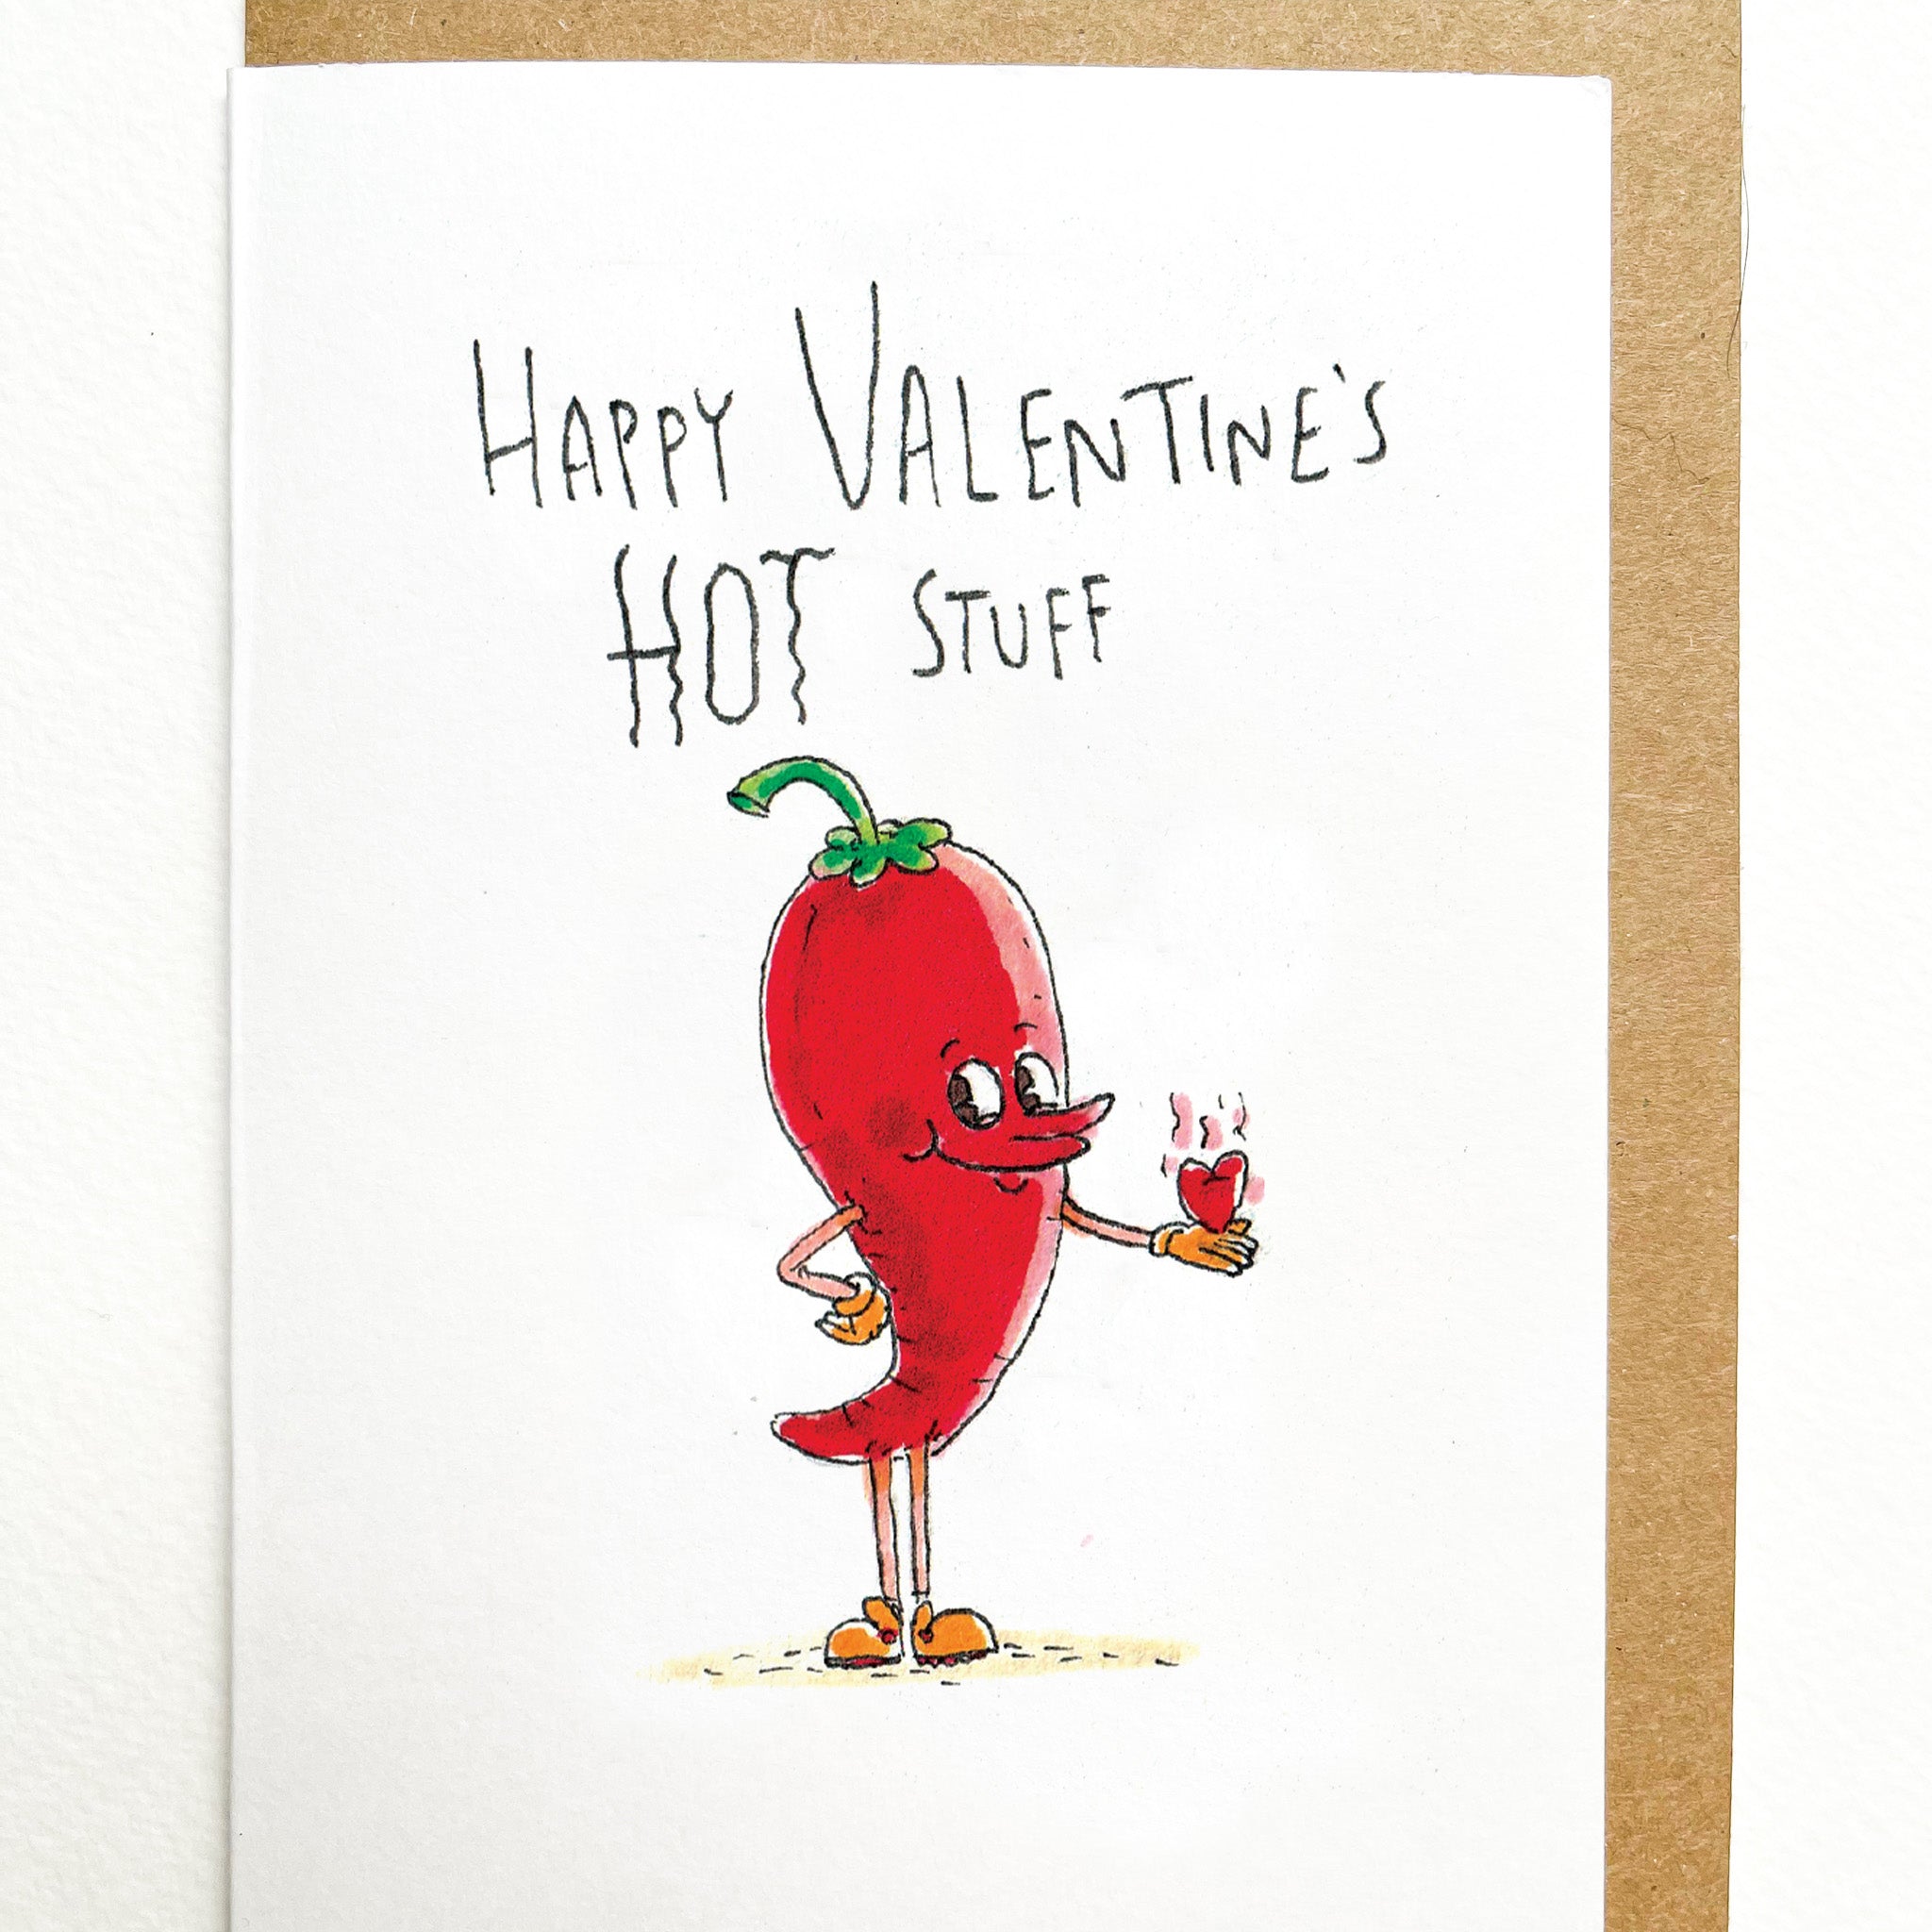 Happy Valentine's Hot Stuff